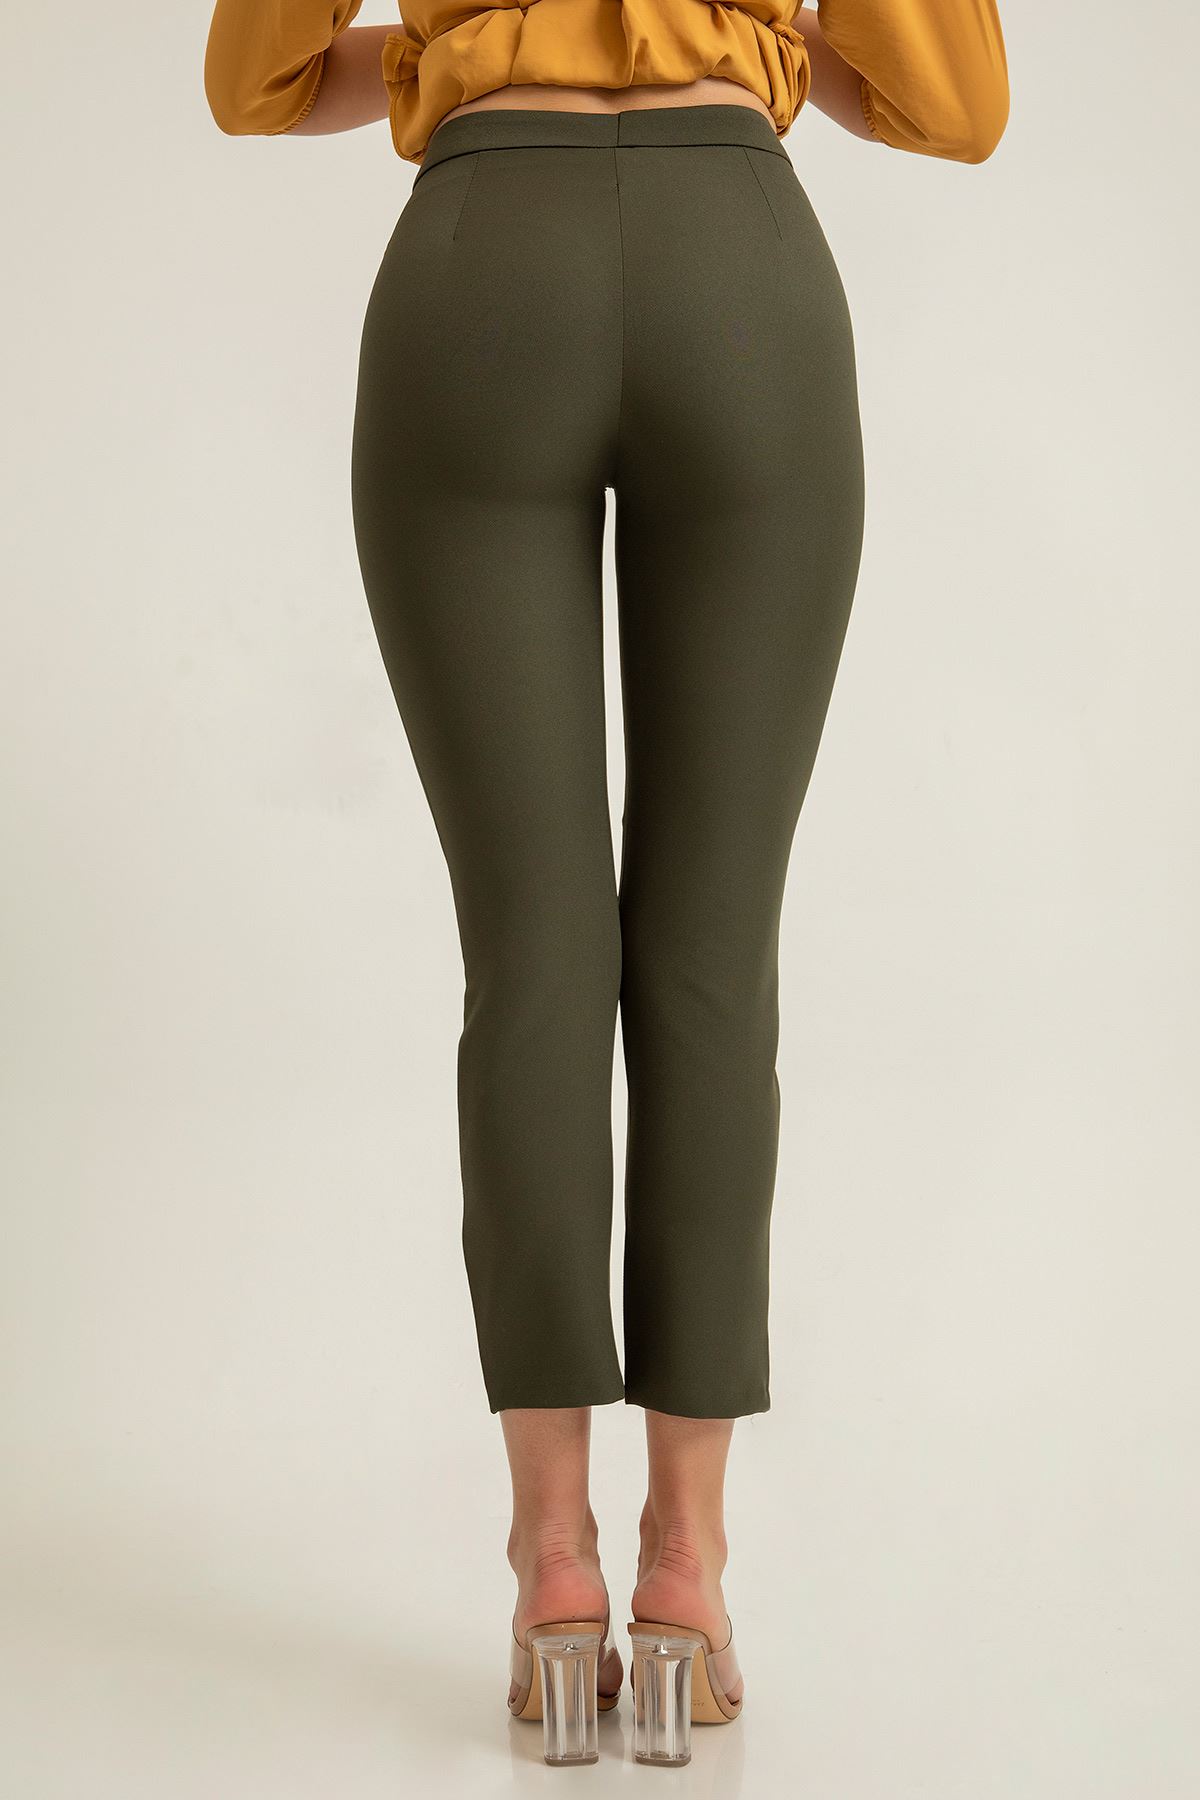 Atlas Fabric Ankle Length Tight Fit Women'S Trouser - Khaki 